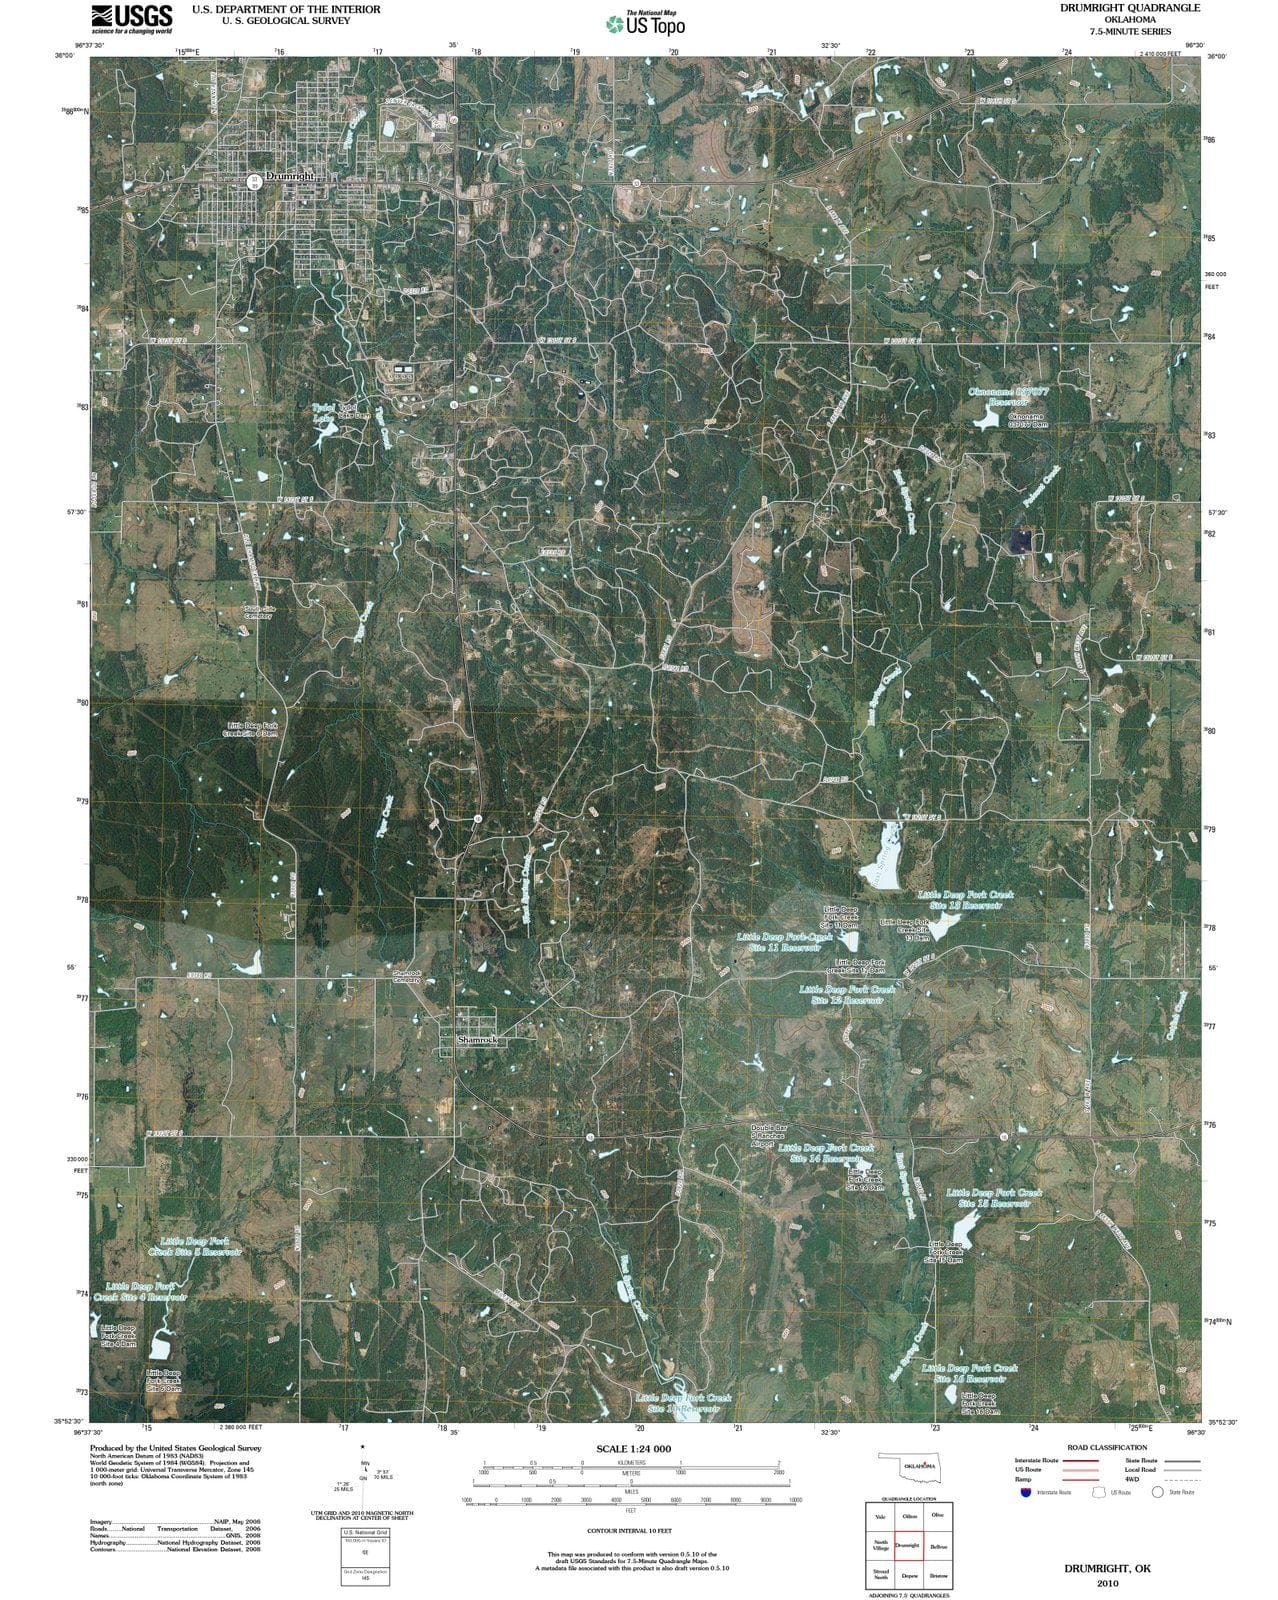 2010 Drumright, OK - Oklahoma - USGS Topographic Map